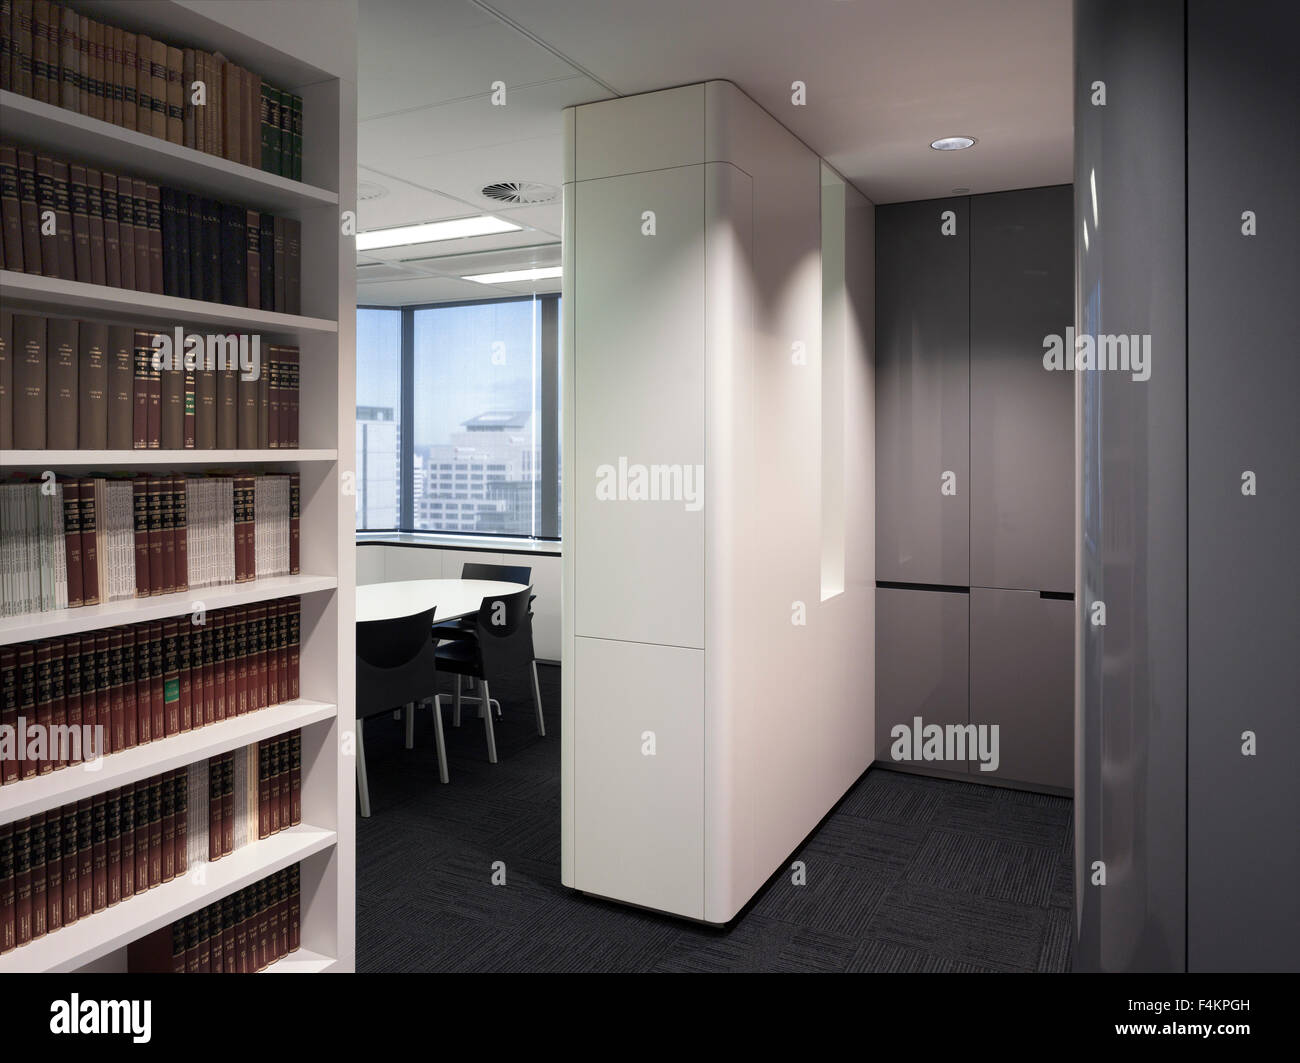 Barrister's chamber. MPC Chambers, Sydney, Australia. Architect: Stanic Harding, 2015. Stock Photo